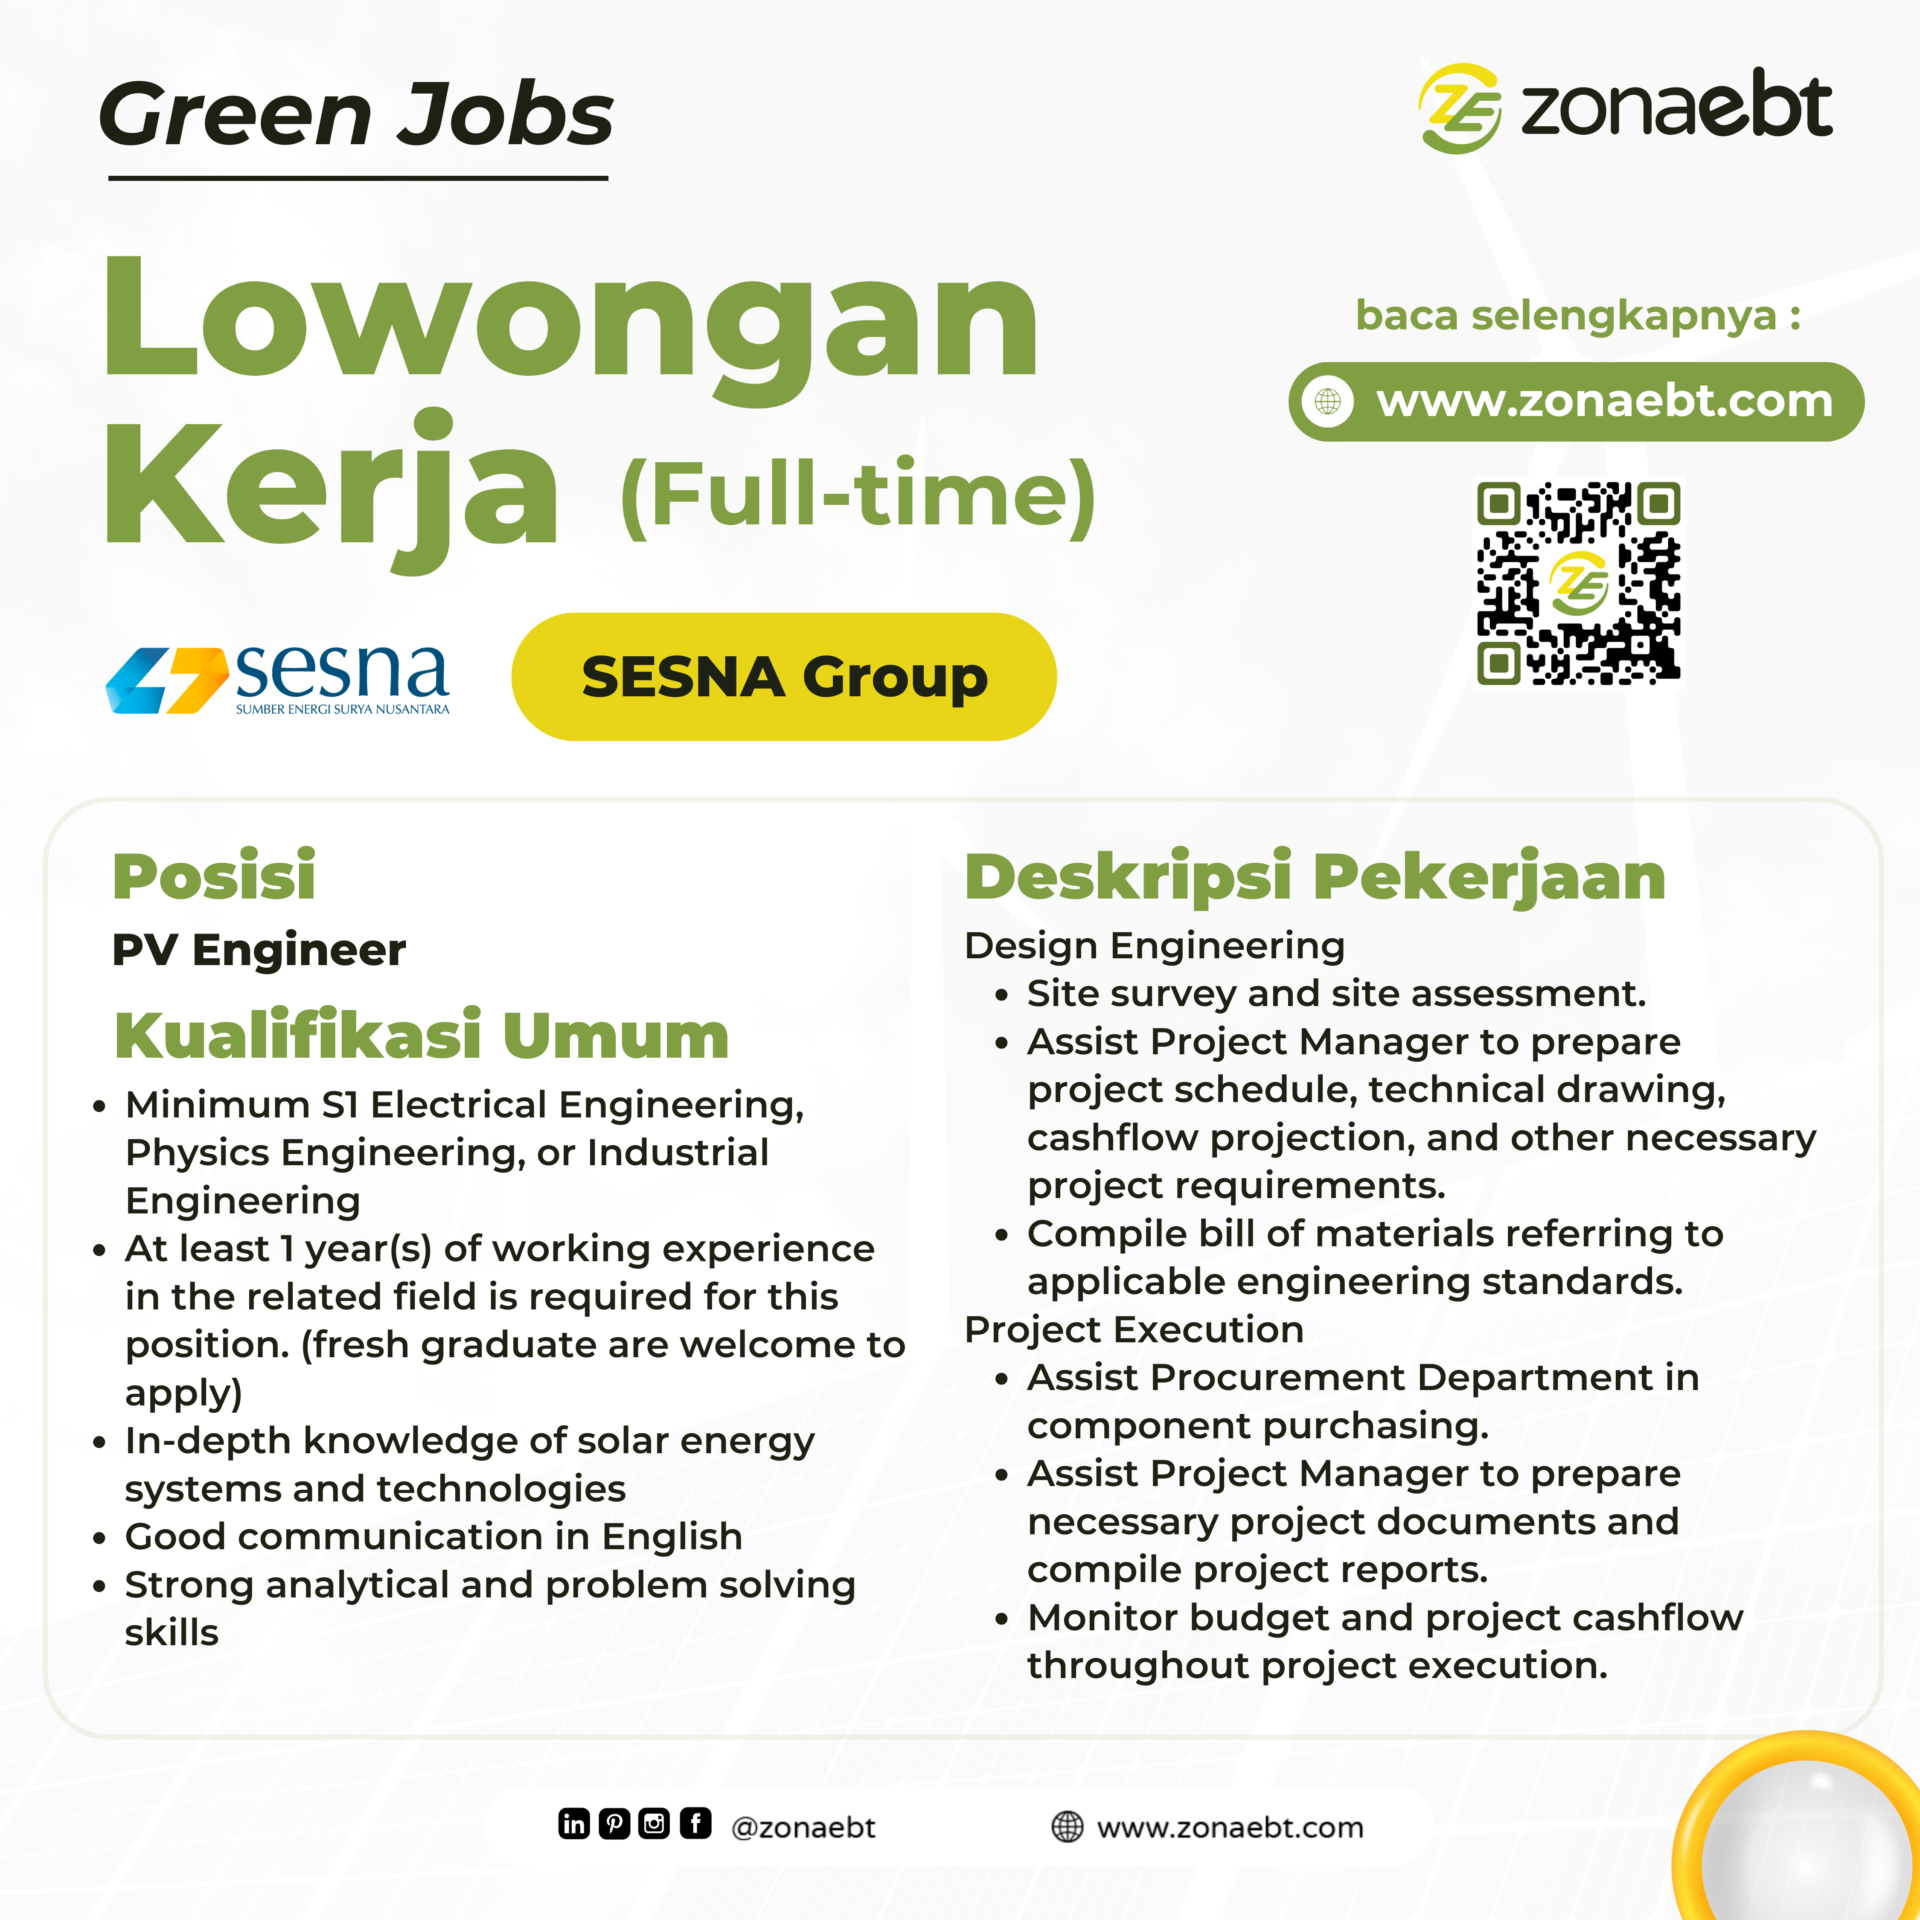 pv engineer greenjobs zonaebt.com